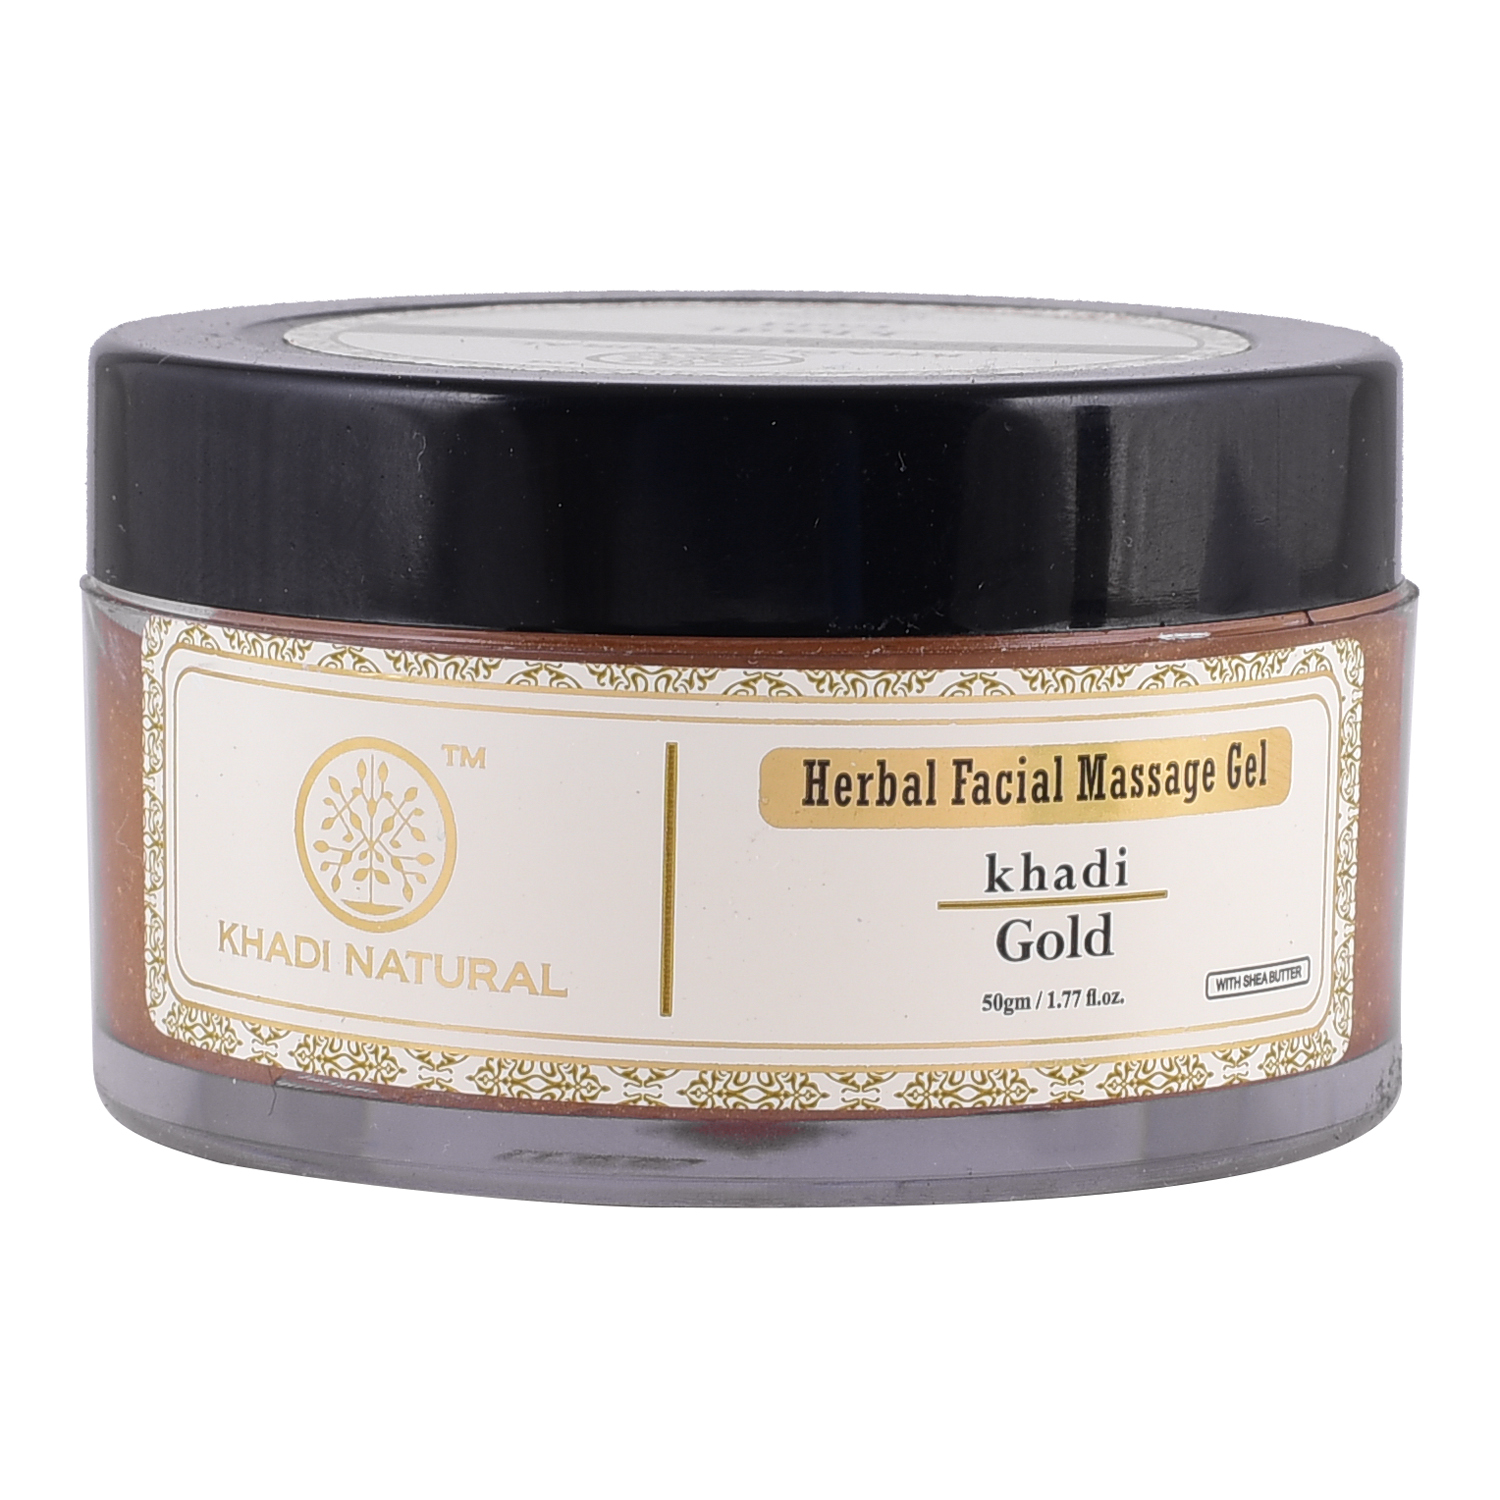 Herbal Facial Massage Gel Khadi GOLD, Khadi Natural (Массажный гель для лица ЗОЛОТО с маслом ши, Кхади Нэчрл), 50 г.